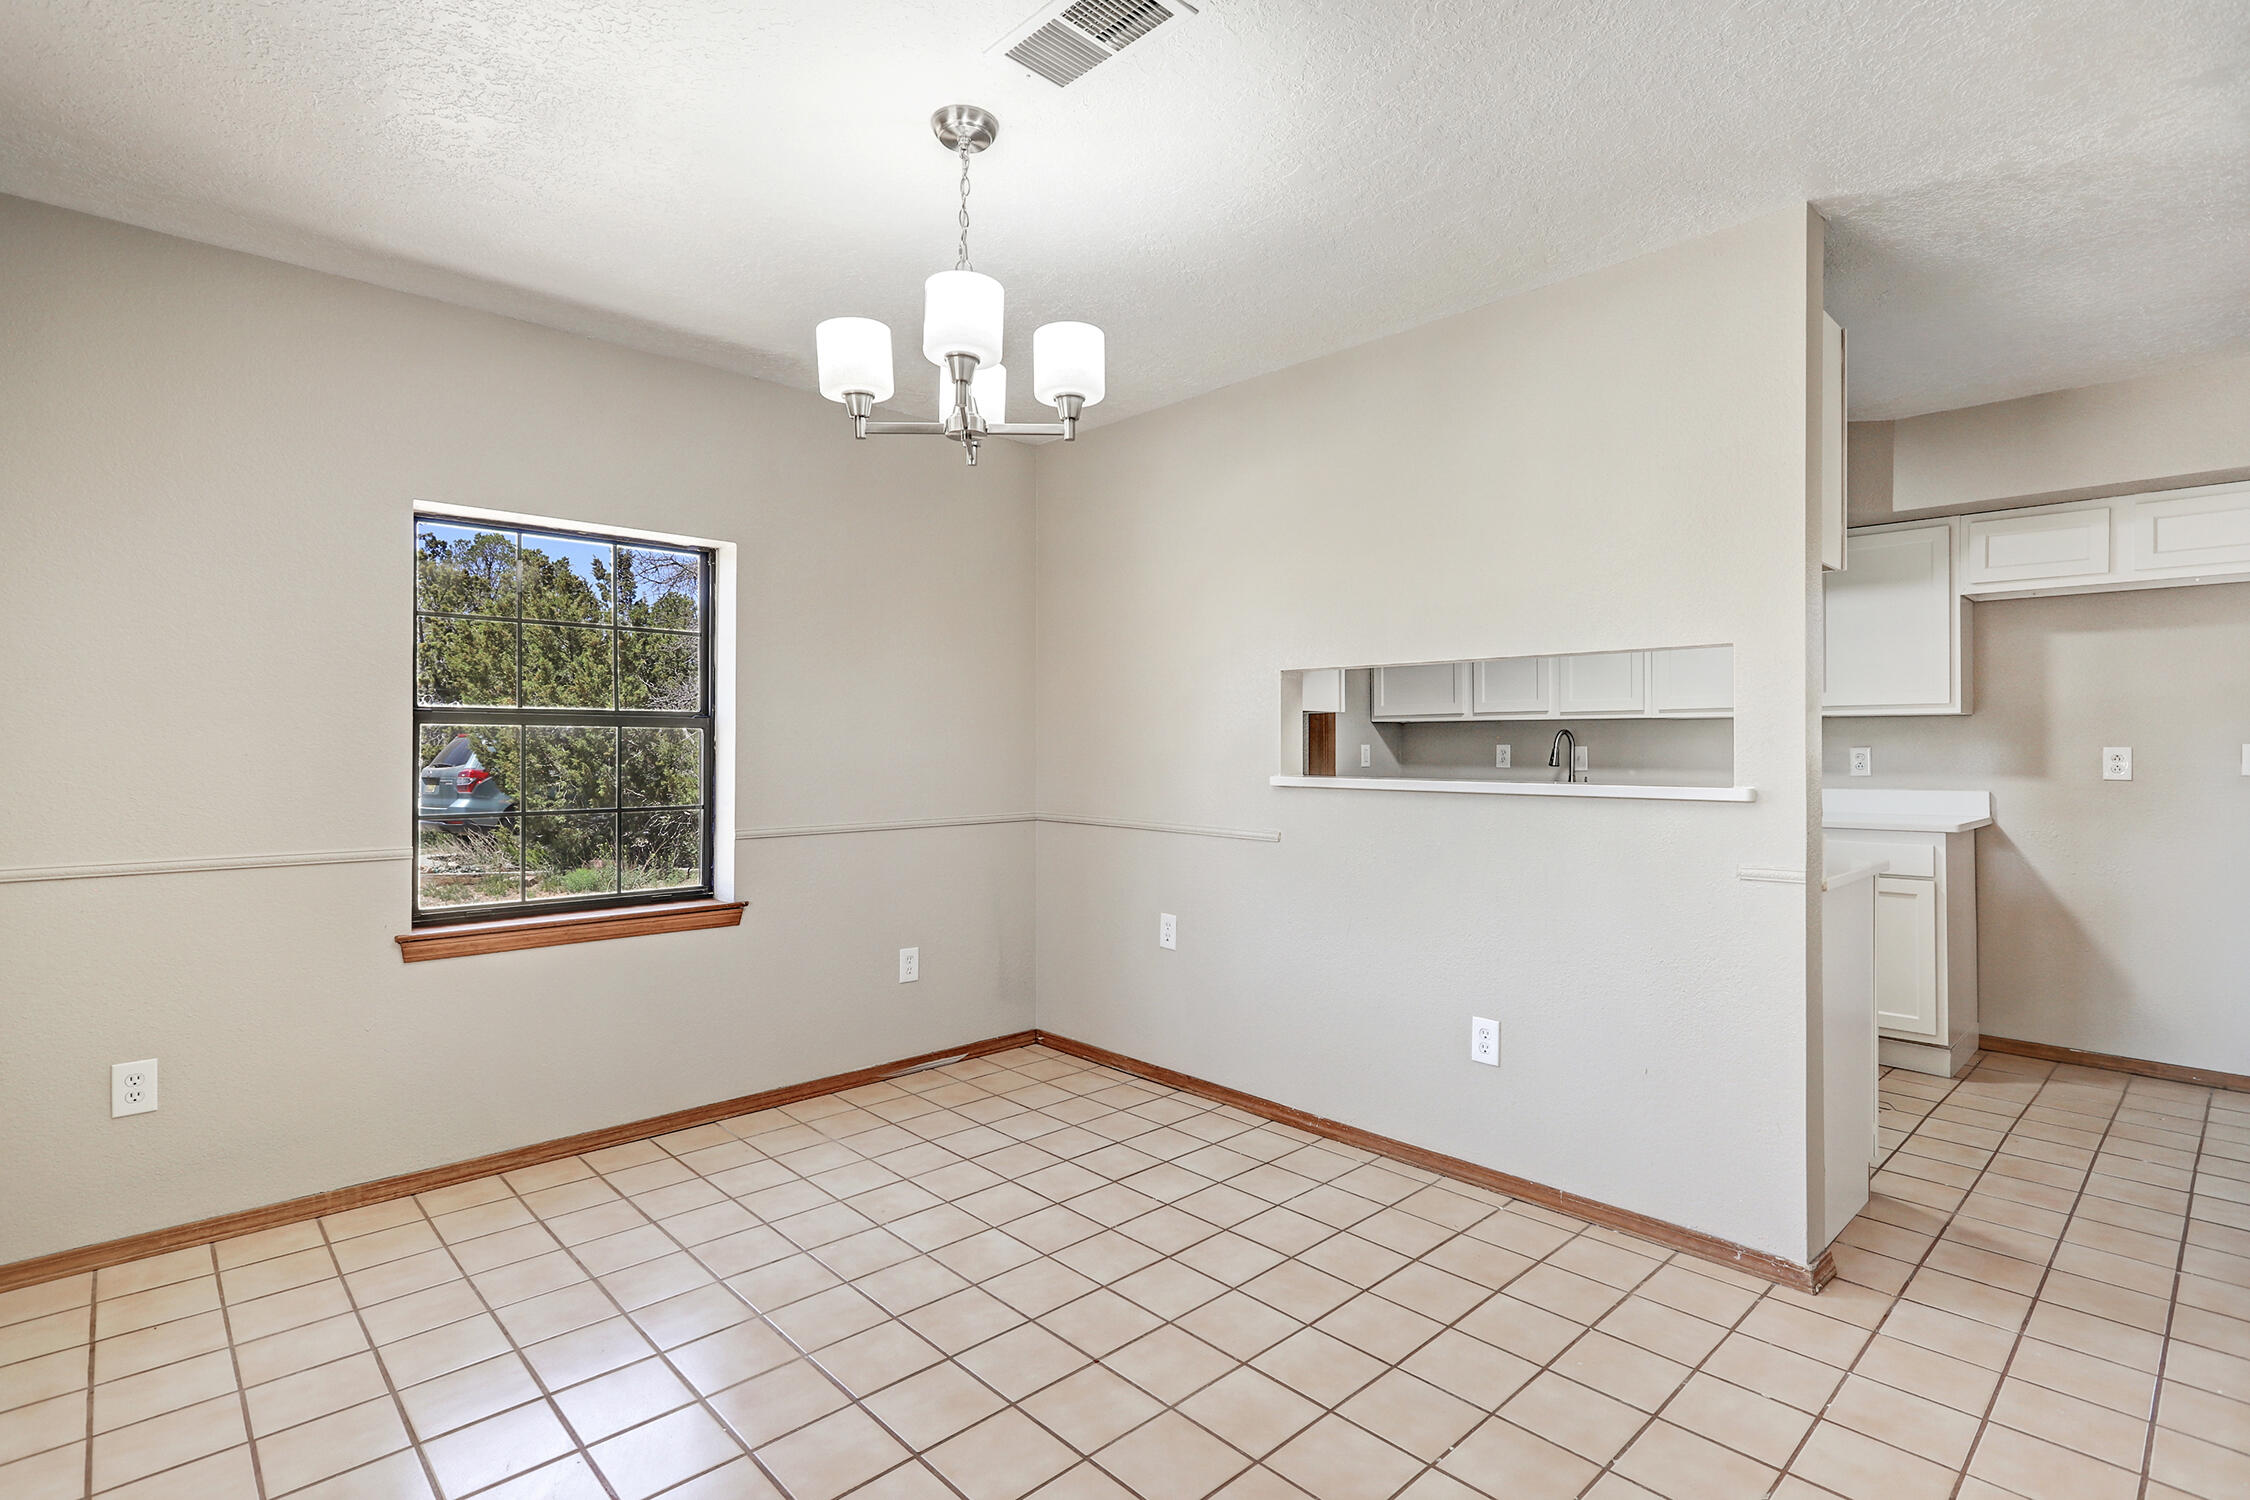 12 Ridge Road, Edgewood, New Mexico 87015, 3 Bedrooms Bedrooms, ,2 BathroomsBathrooms,Residential,For Sale,12 Ridge Road,1062059